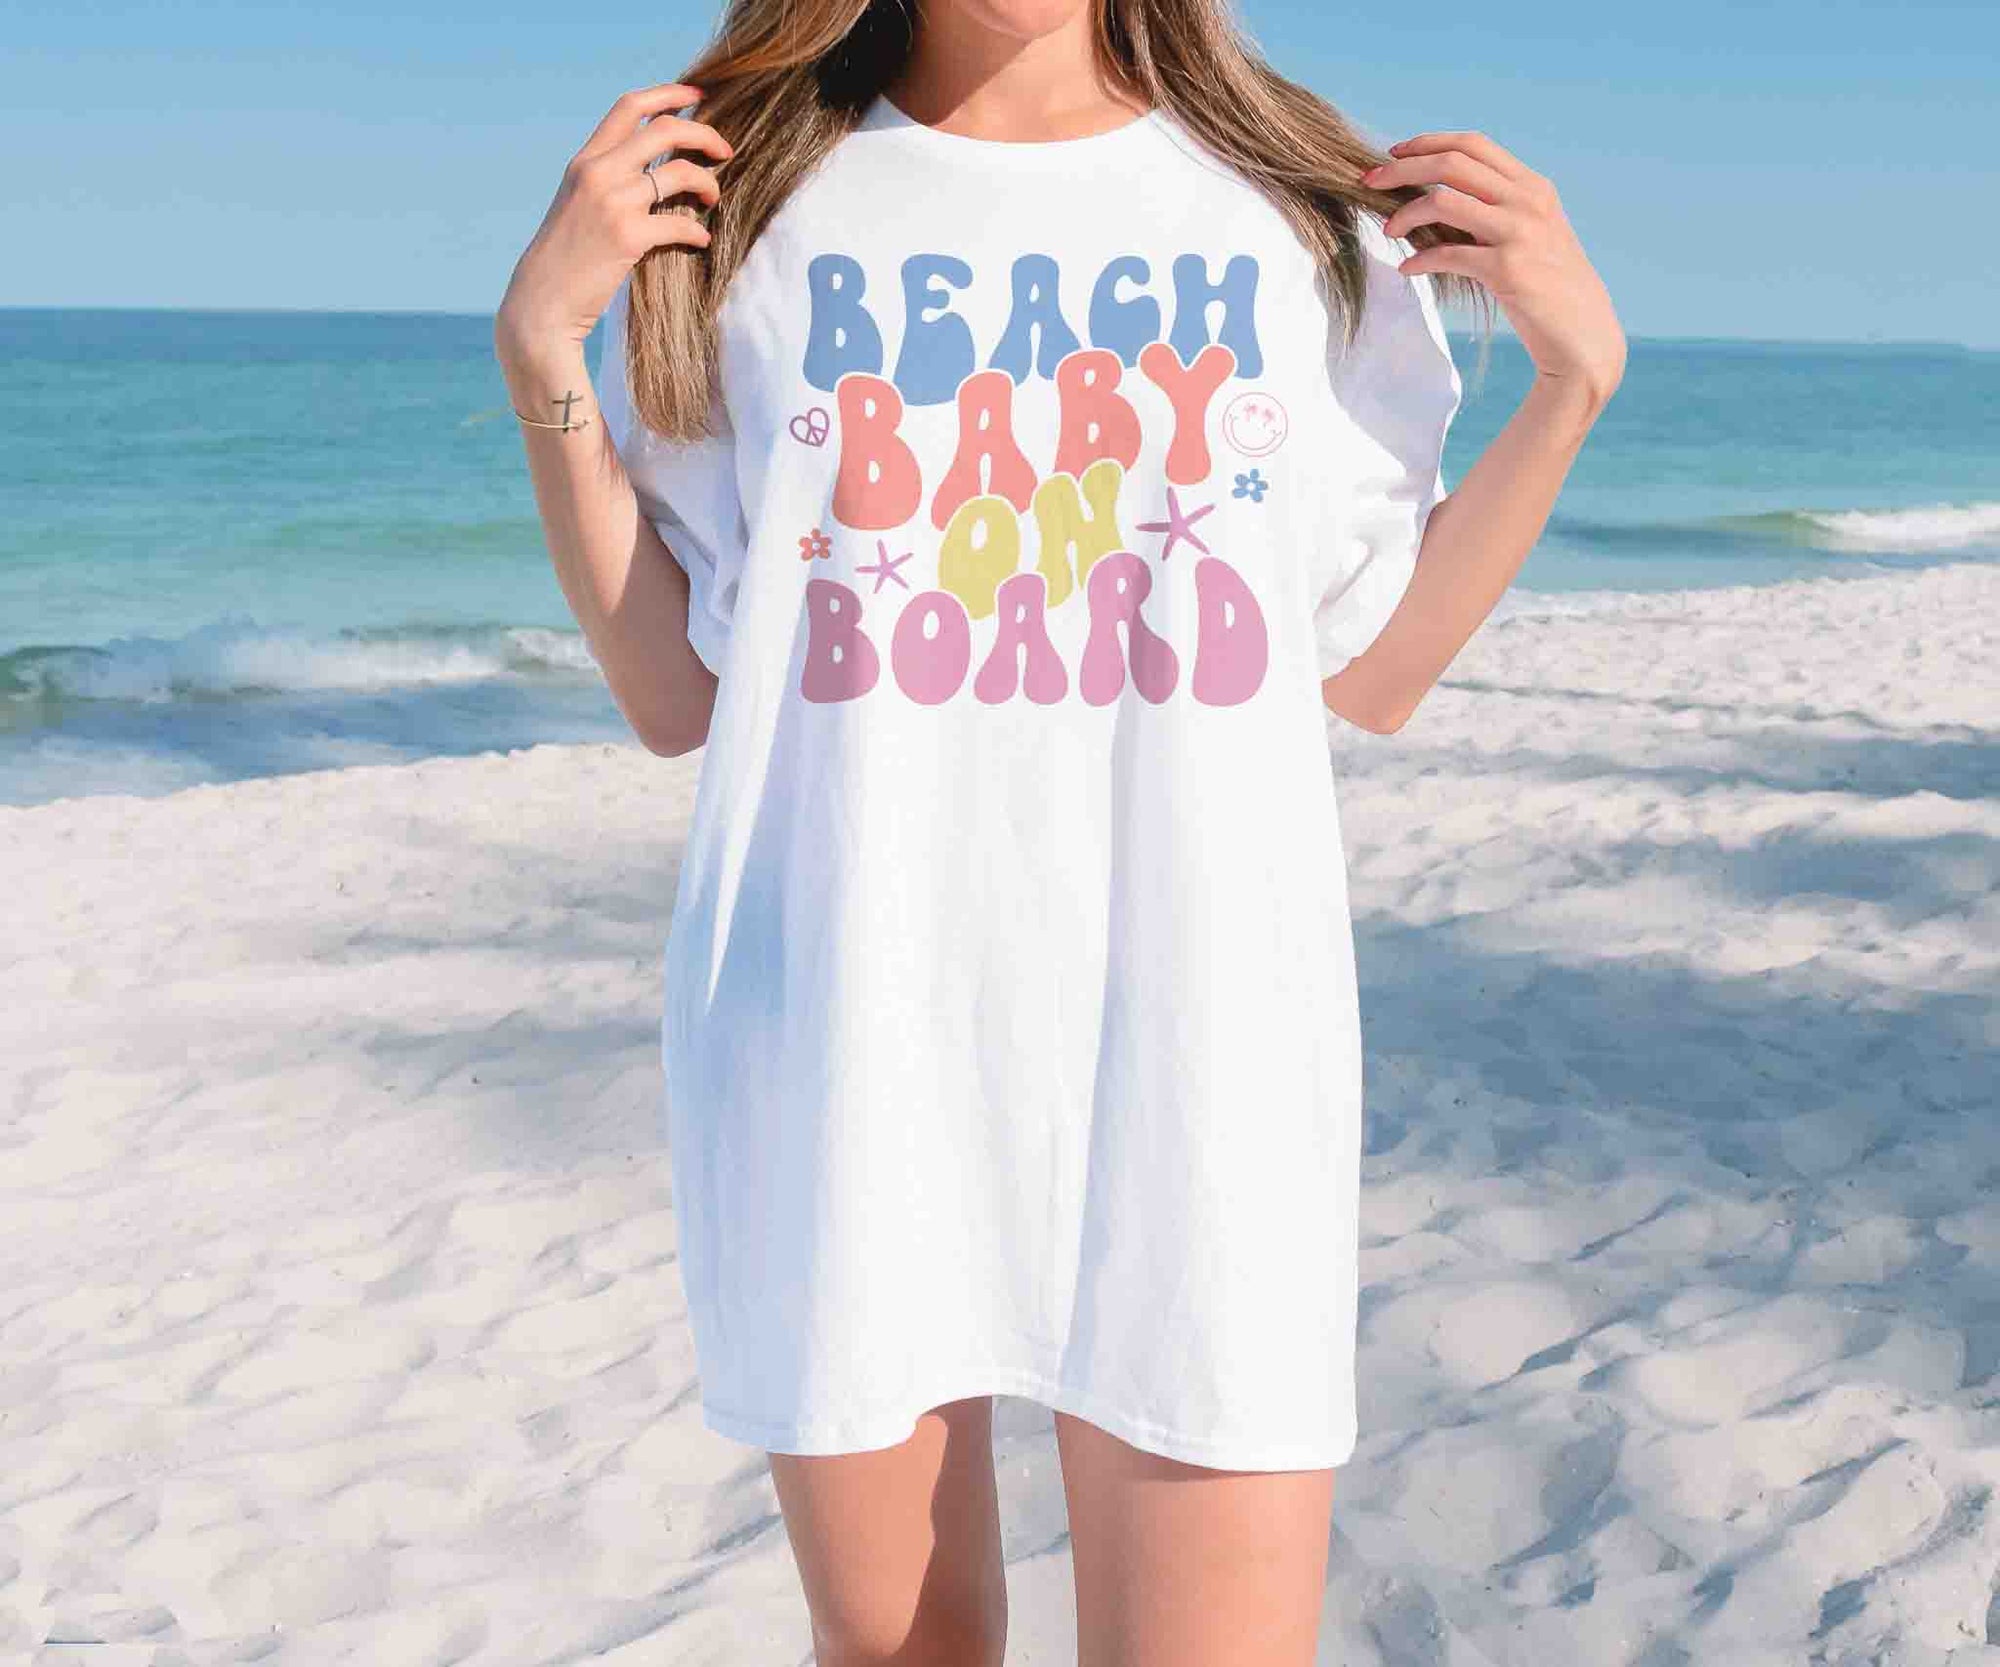 Beach Baby On Board Shirt - Mod Reveals